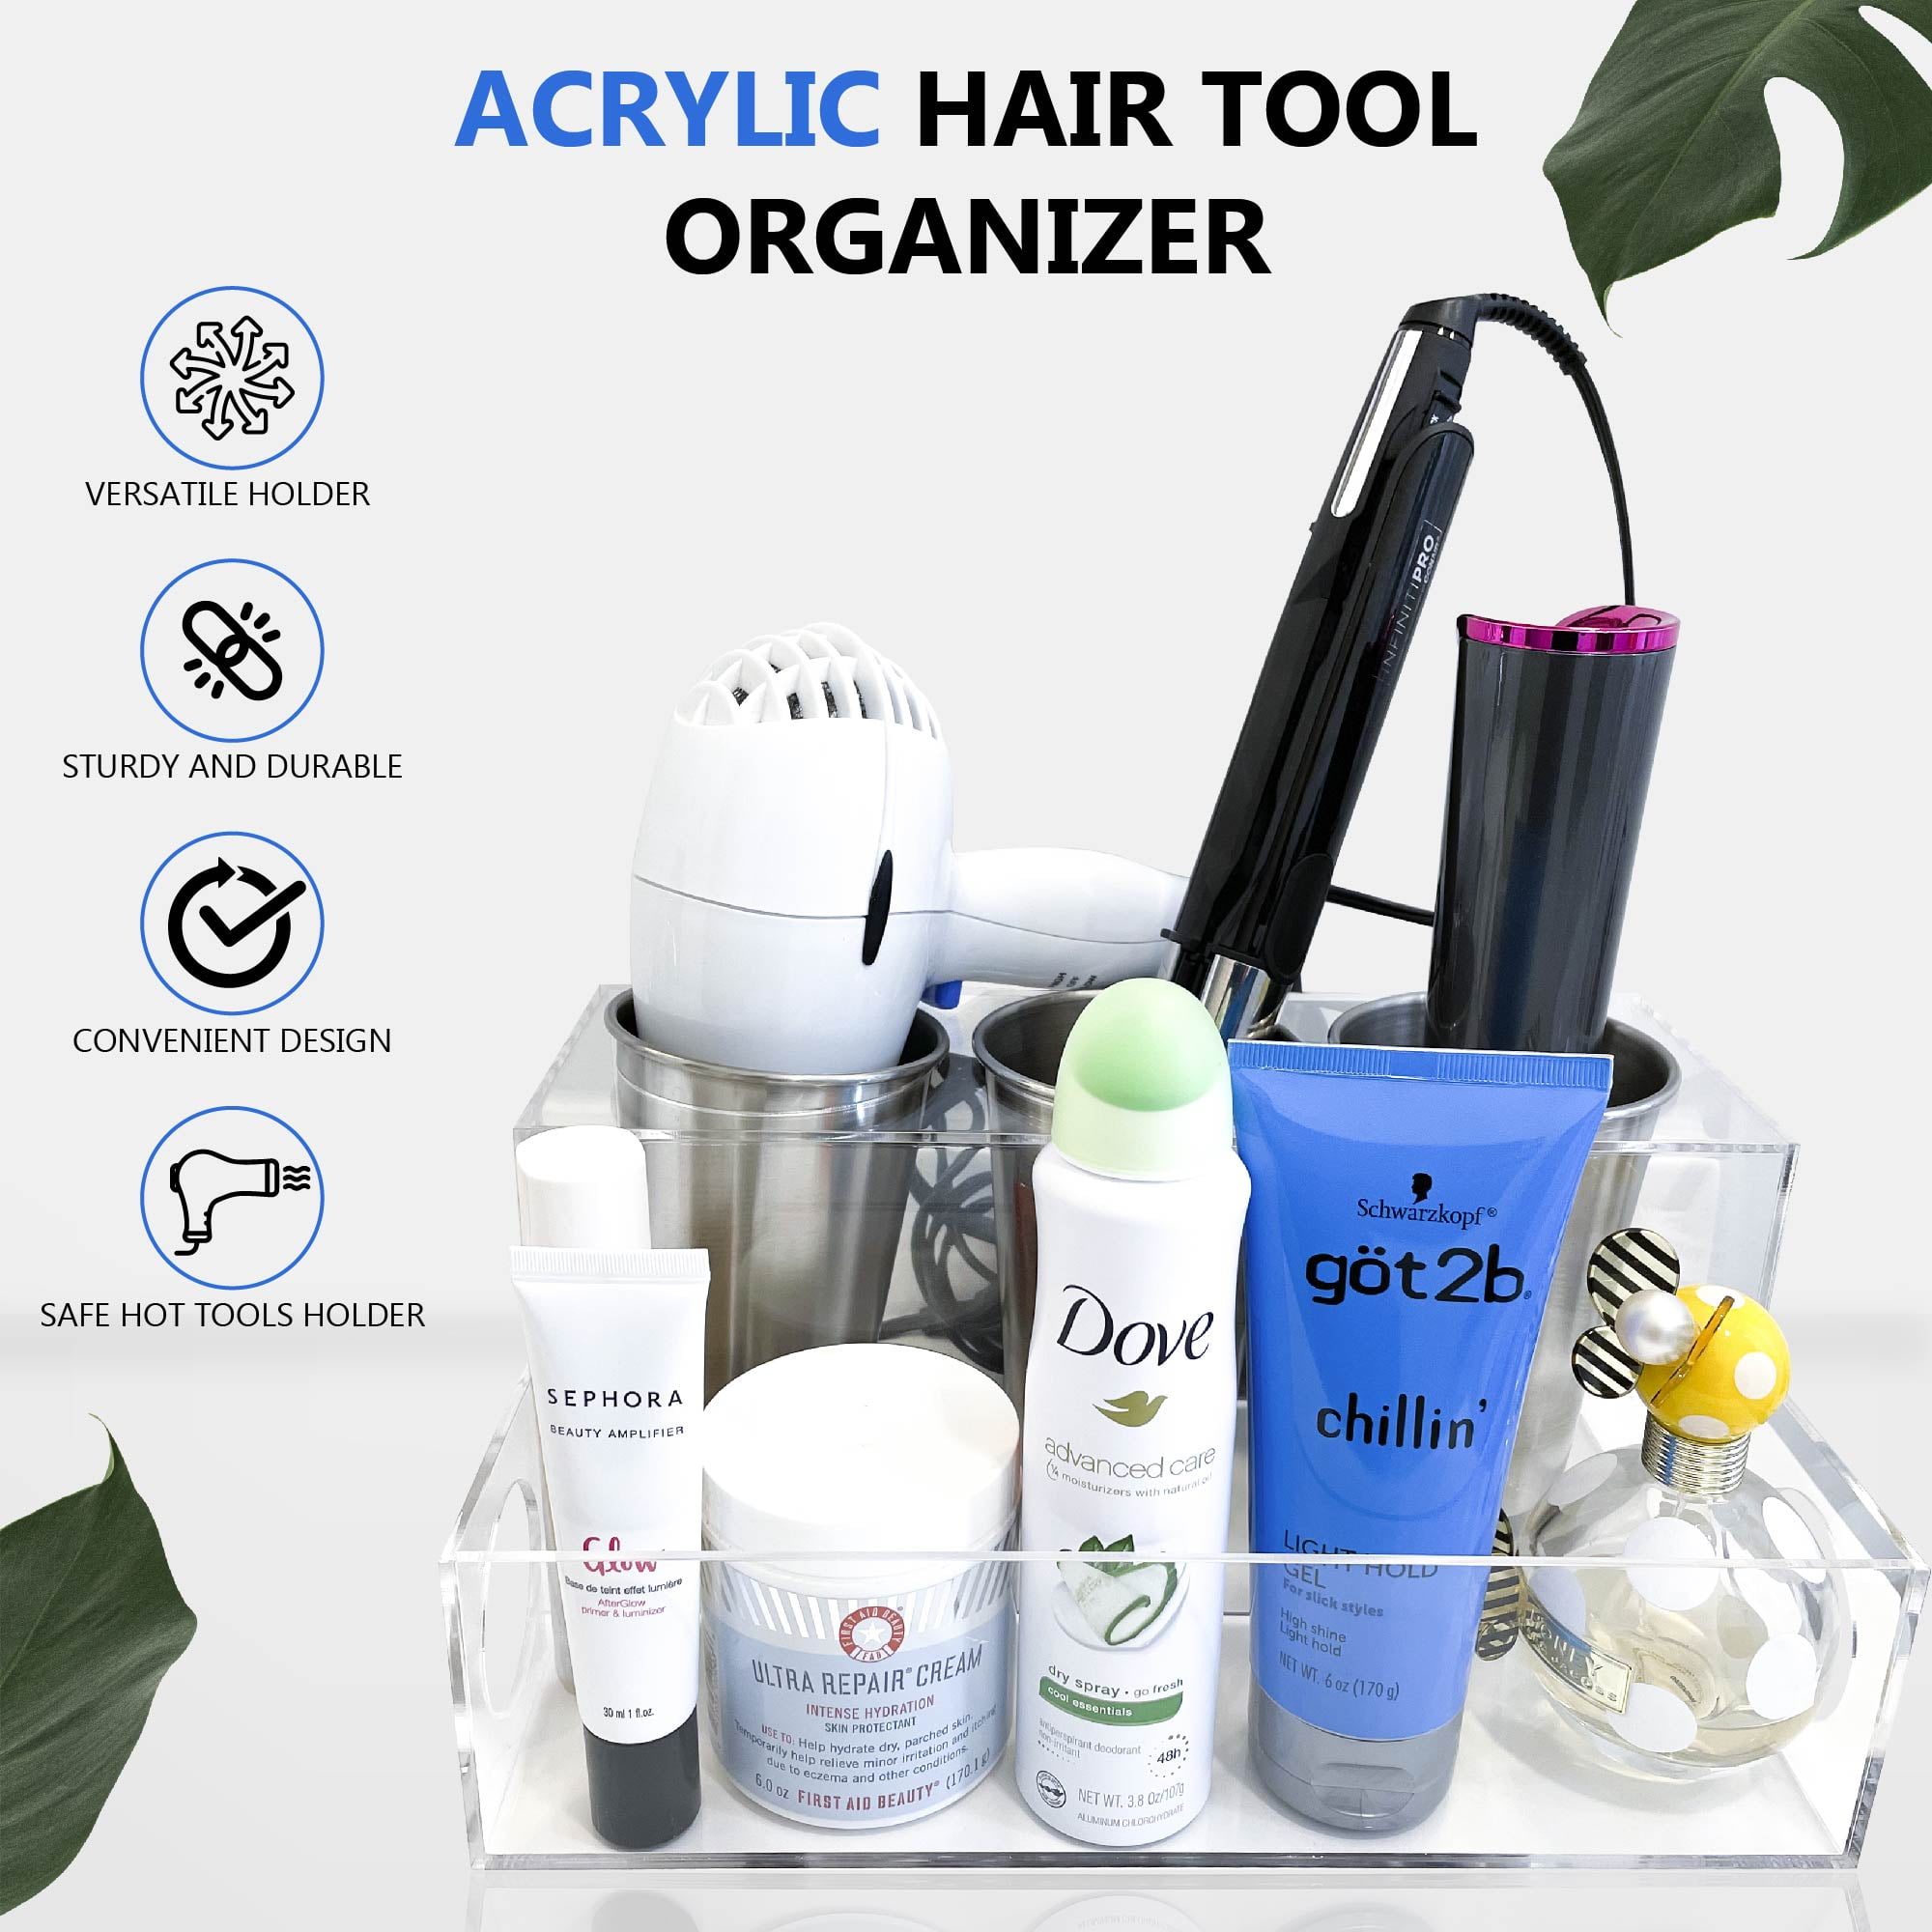 NIUBEE Hair Tool Organizer, Acrylic Hair Dryer and Styling Tool